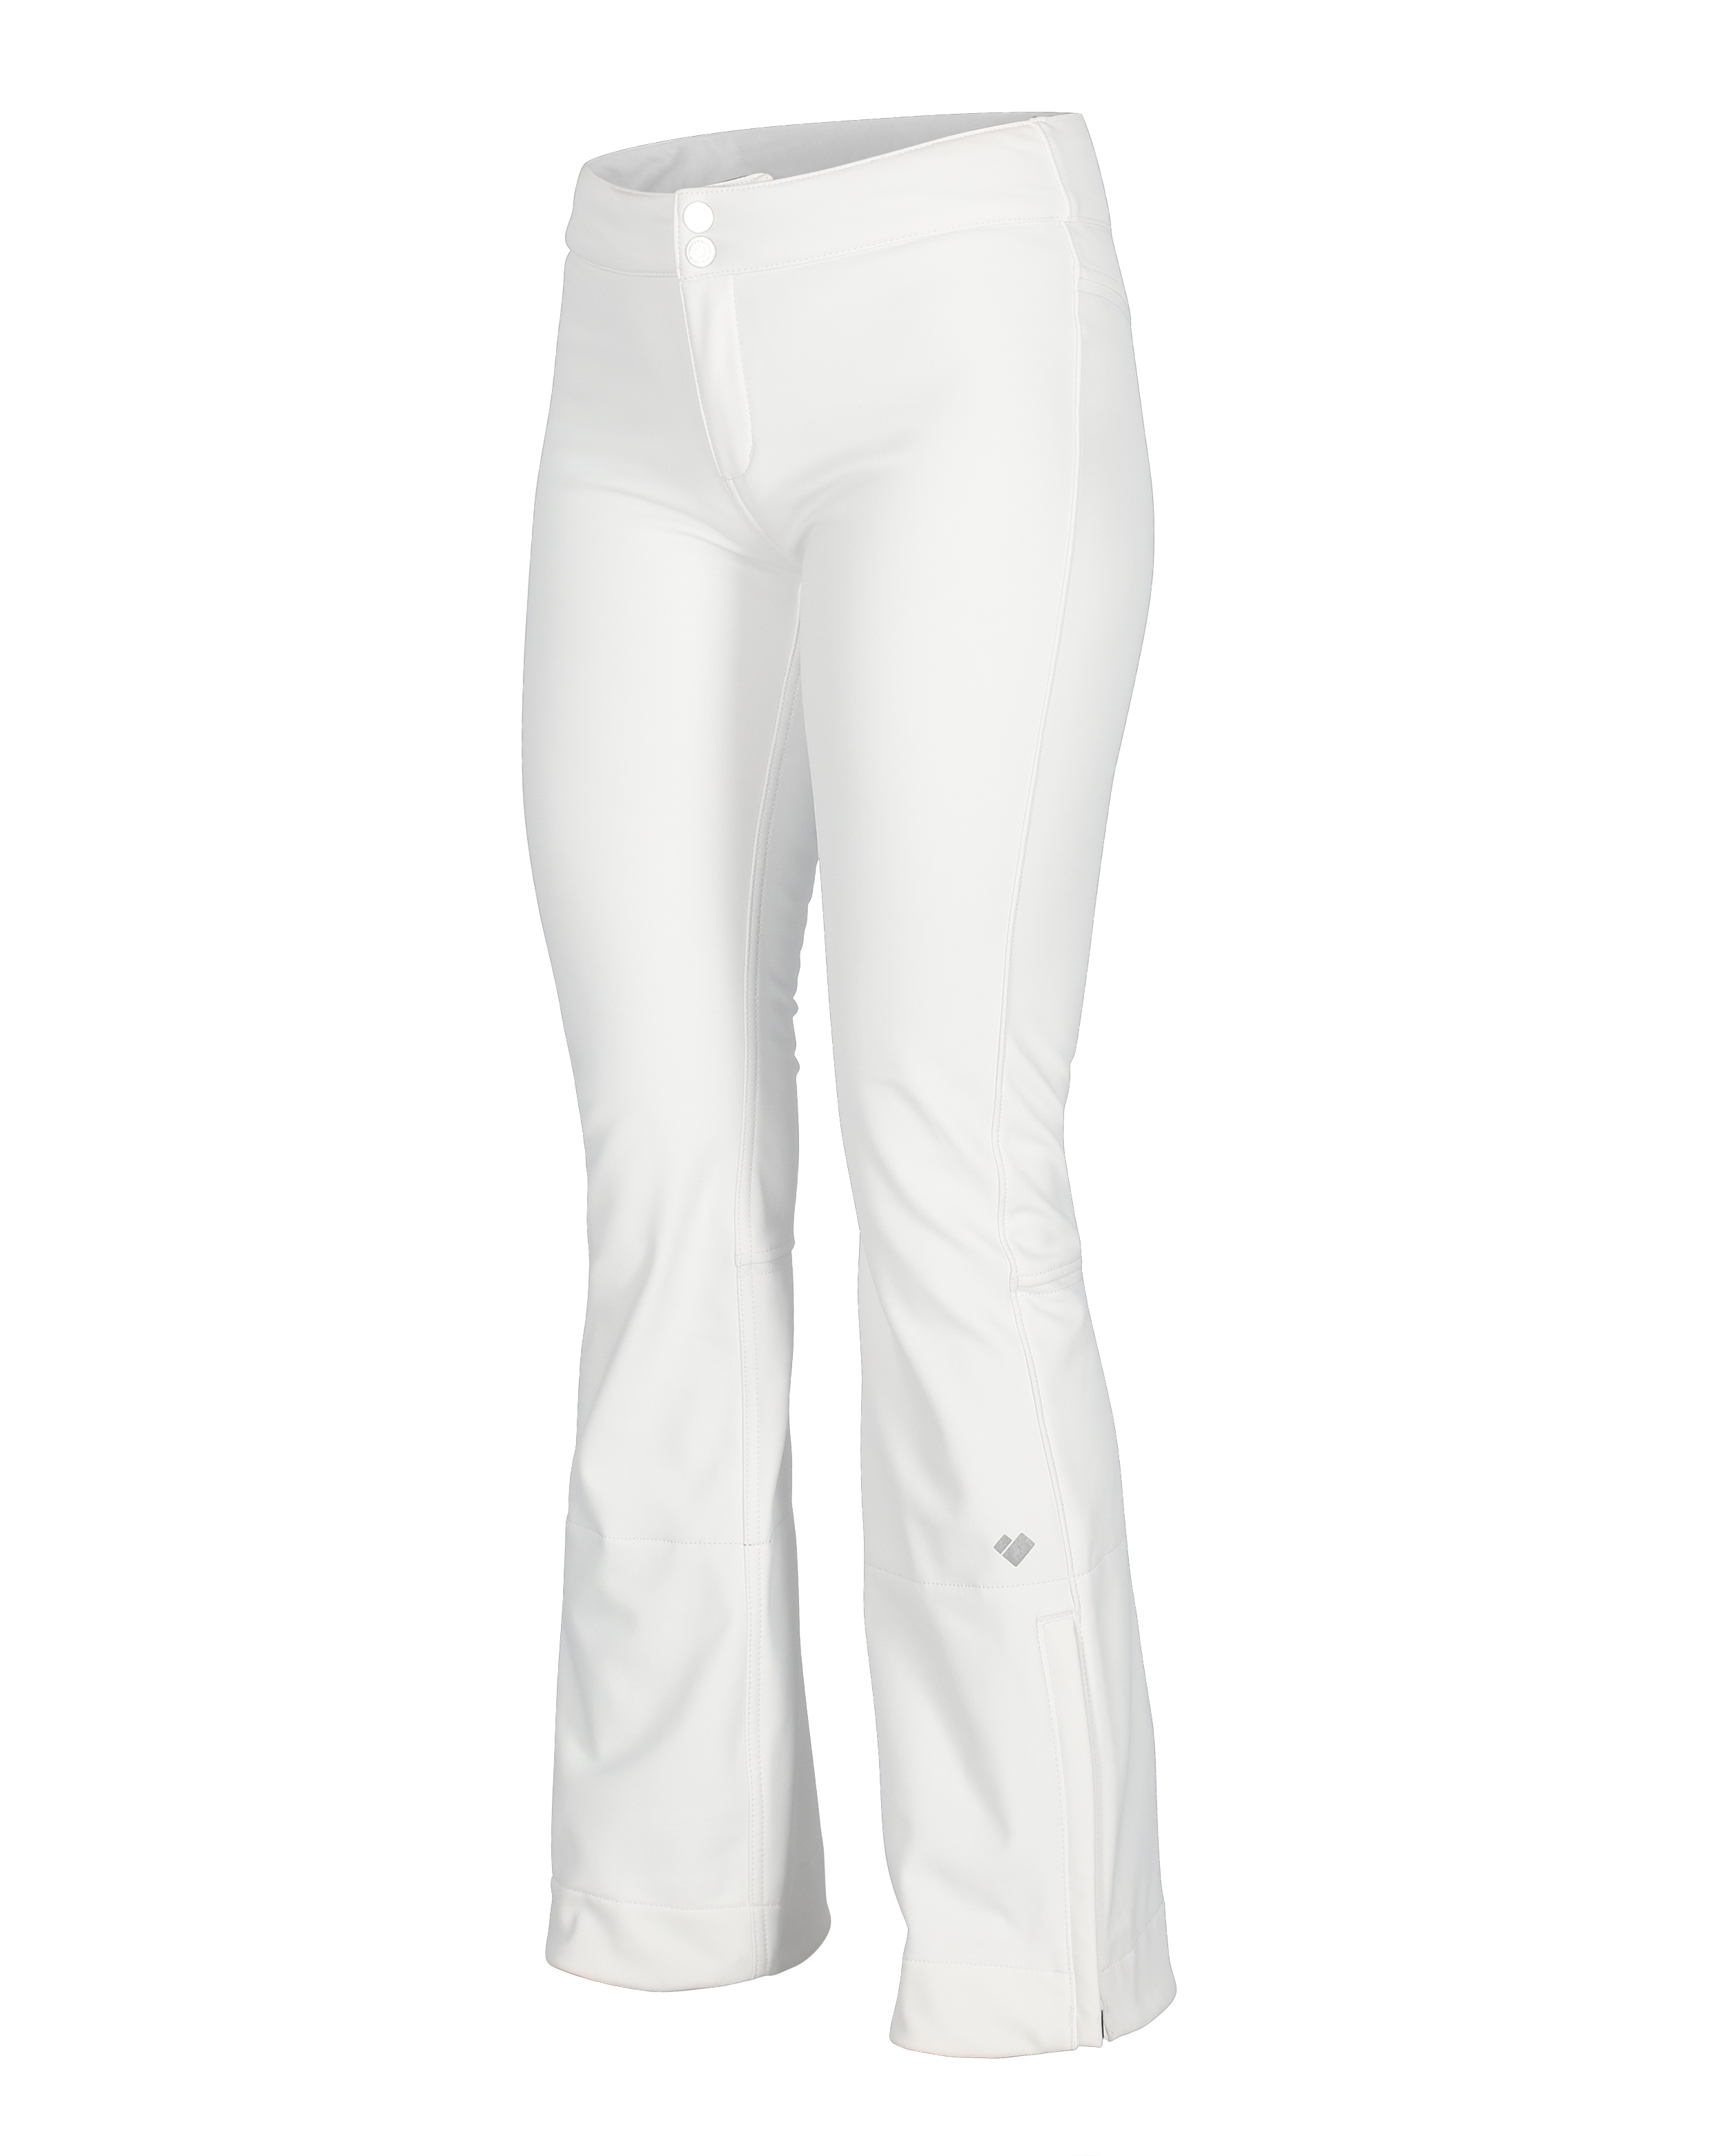 White Jeans For Women - Buy White Jeans For Women online in India